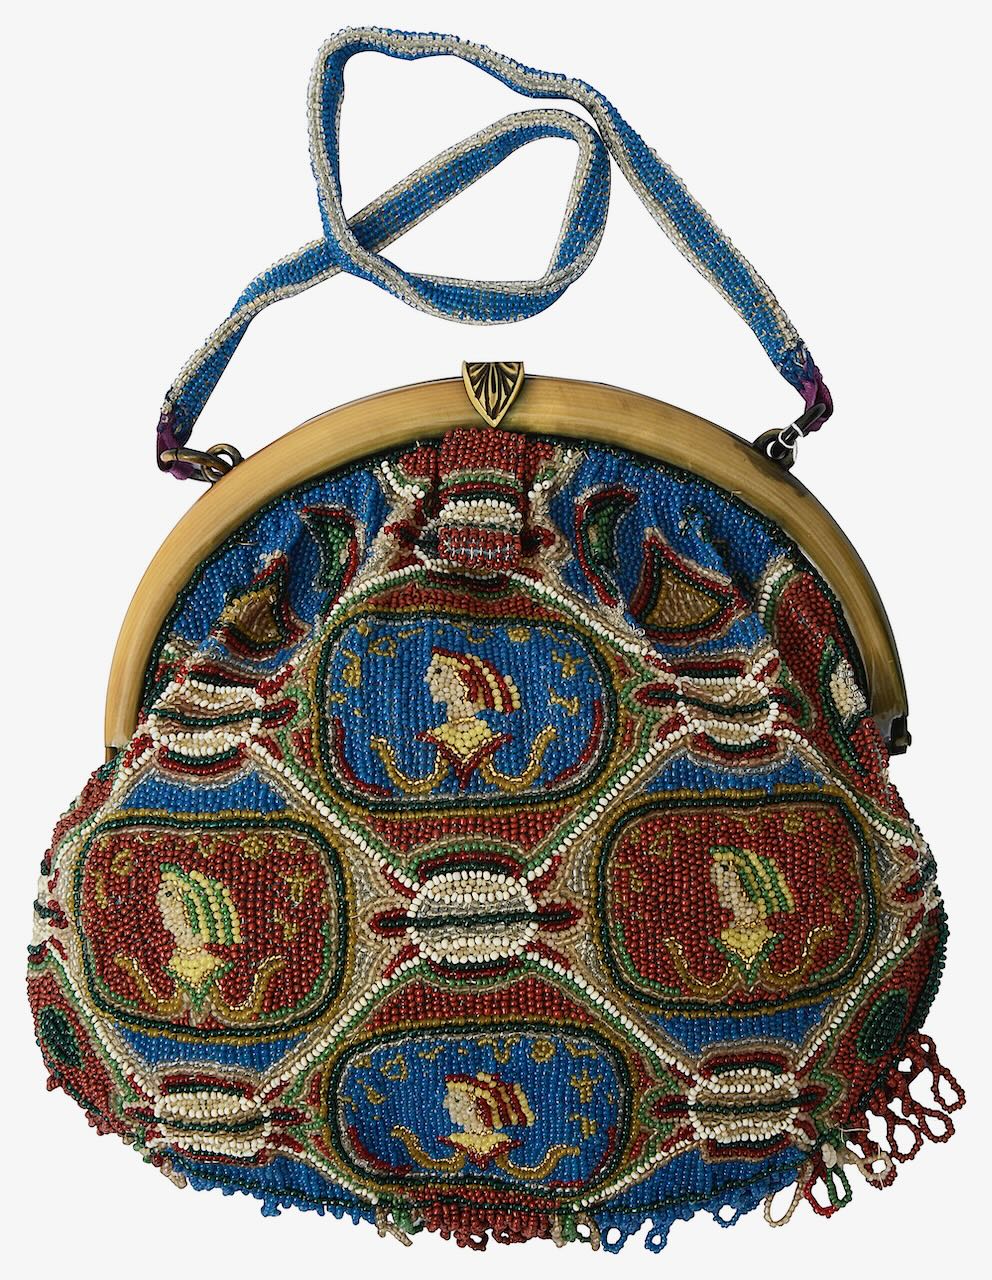 1920s Egyptian Revival beaded evening bag